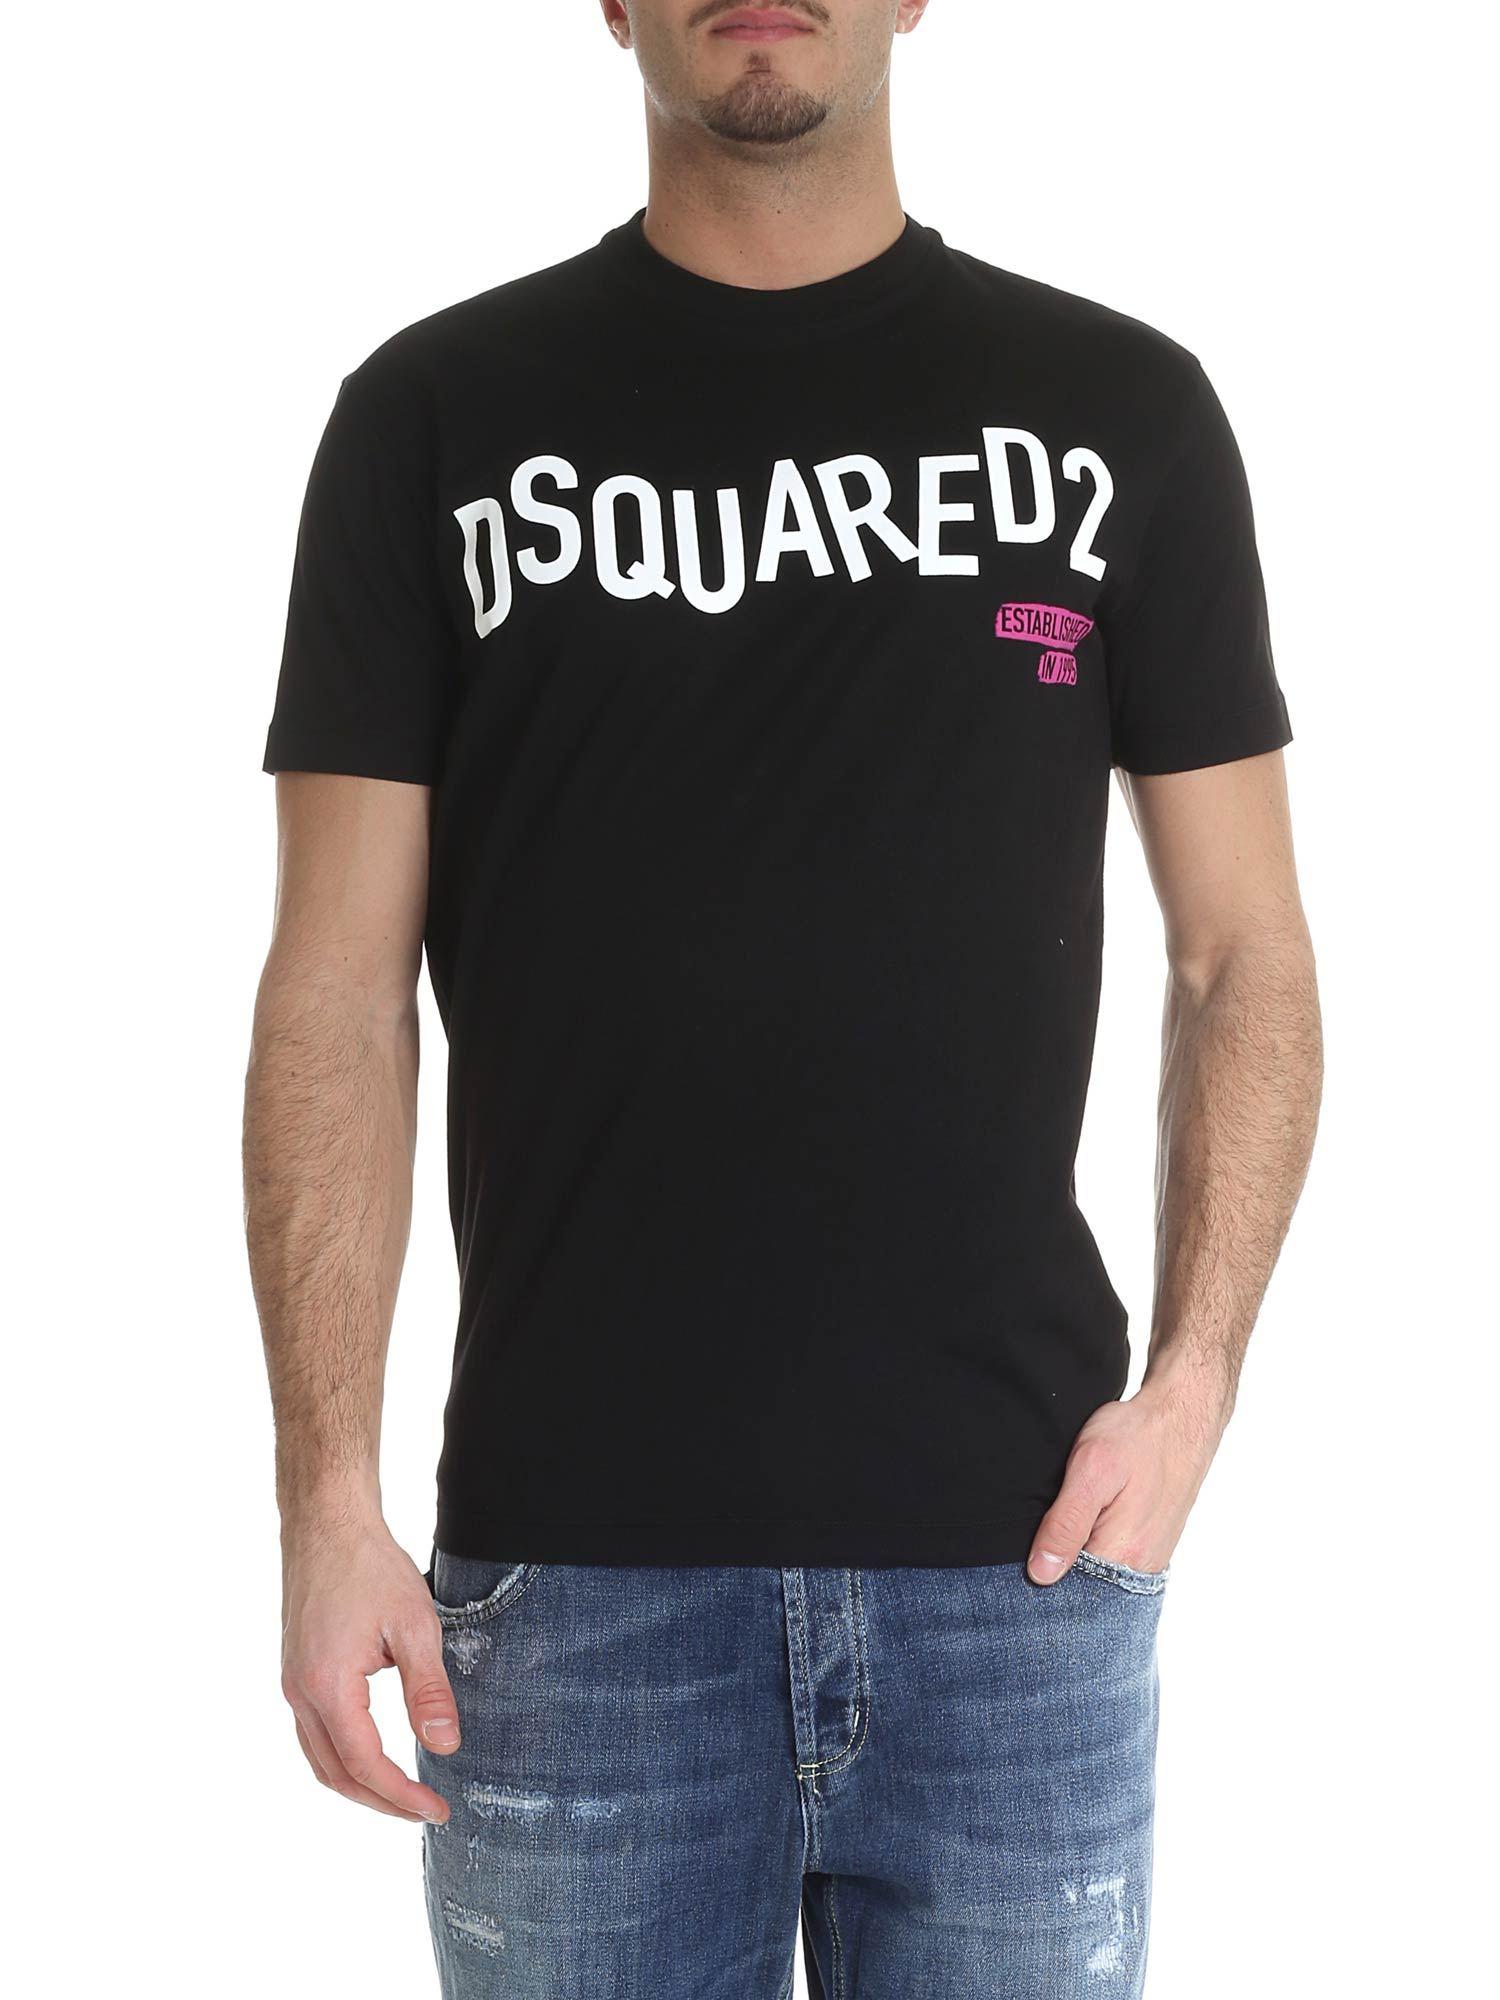 Dsquared Established In 1995 T-shirt 